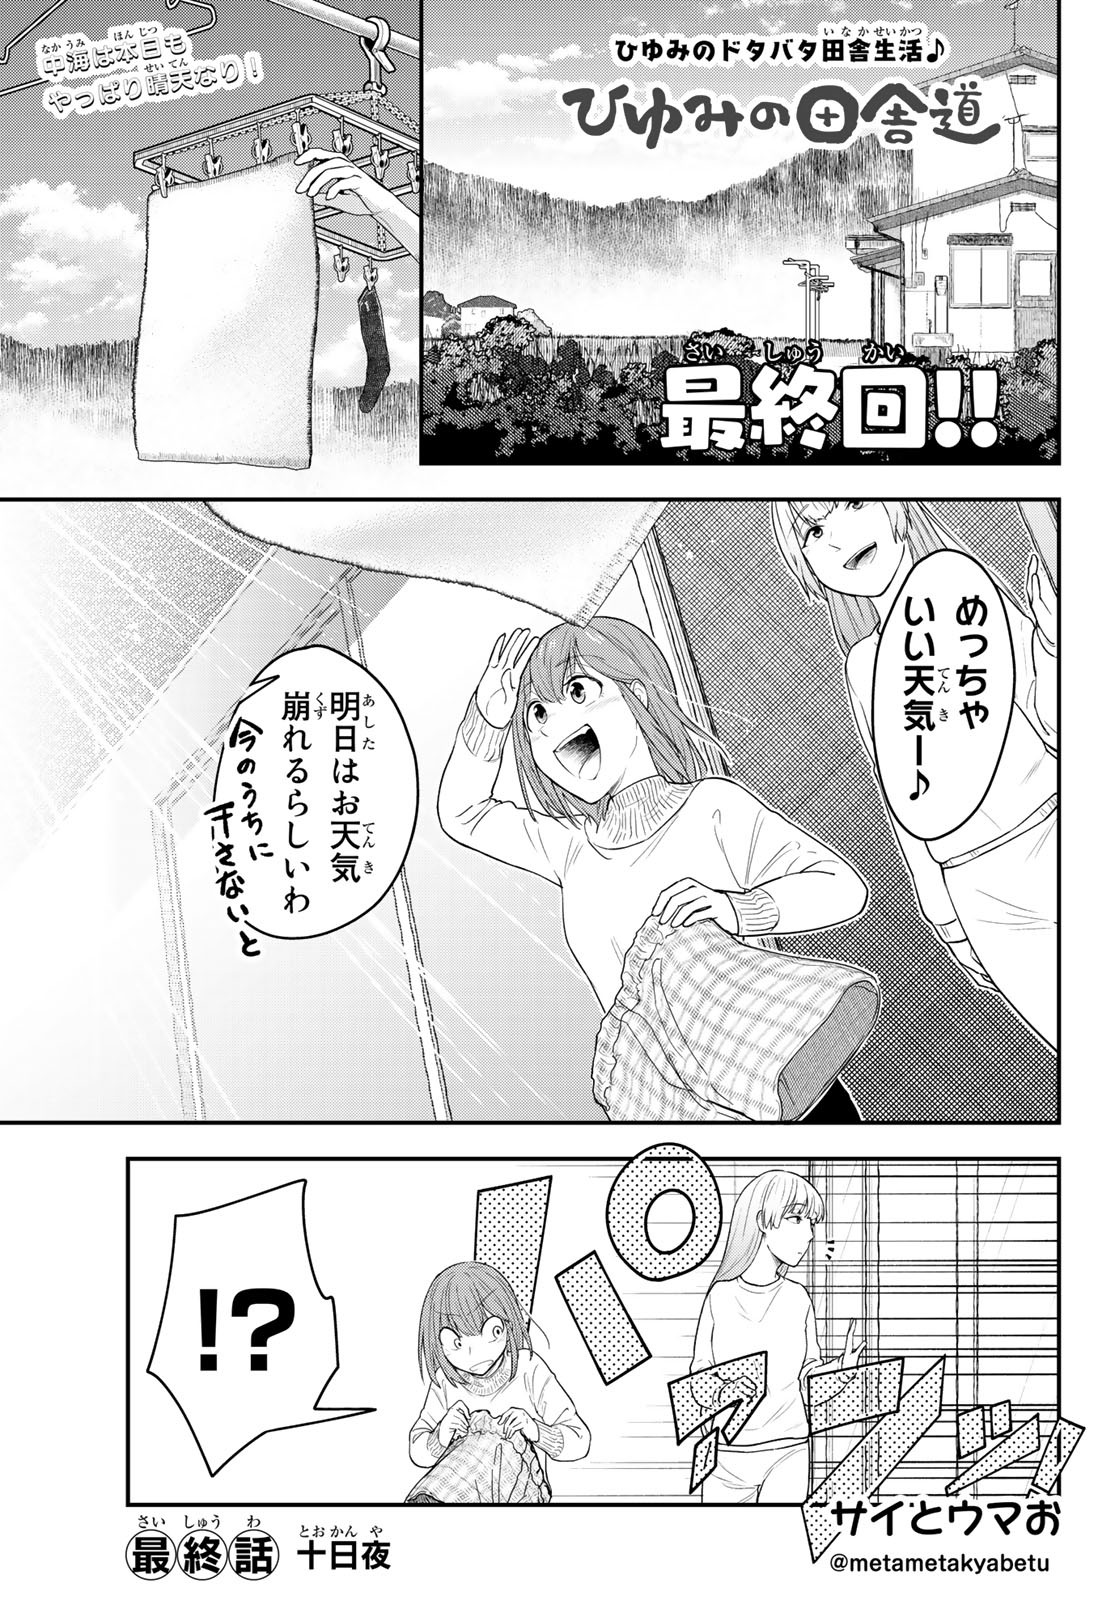 Hiyumi no lnaka-michi - Chapter 13 - Page 1